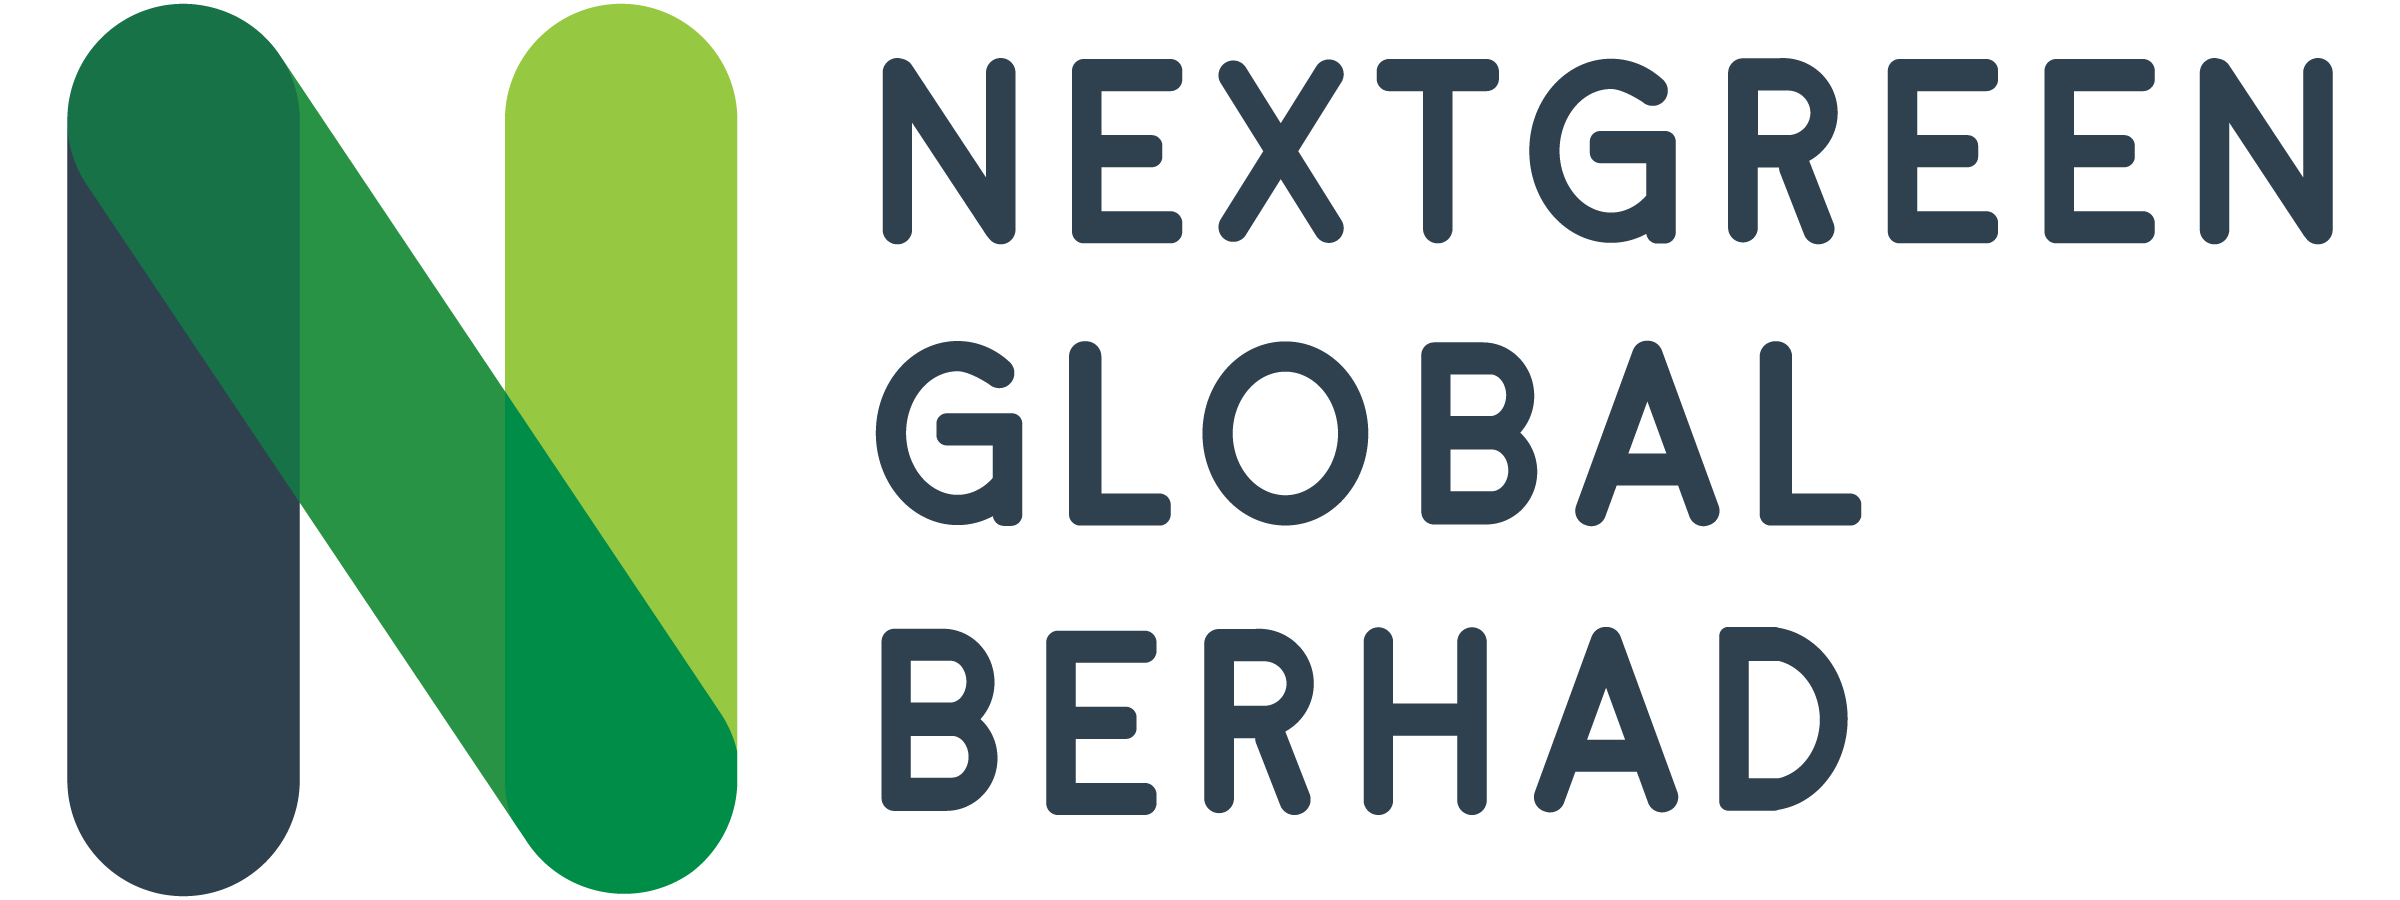 08 Nextgreen Global Berhad (main)